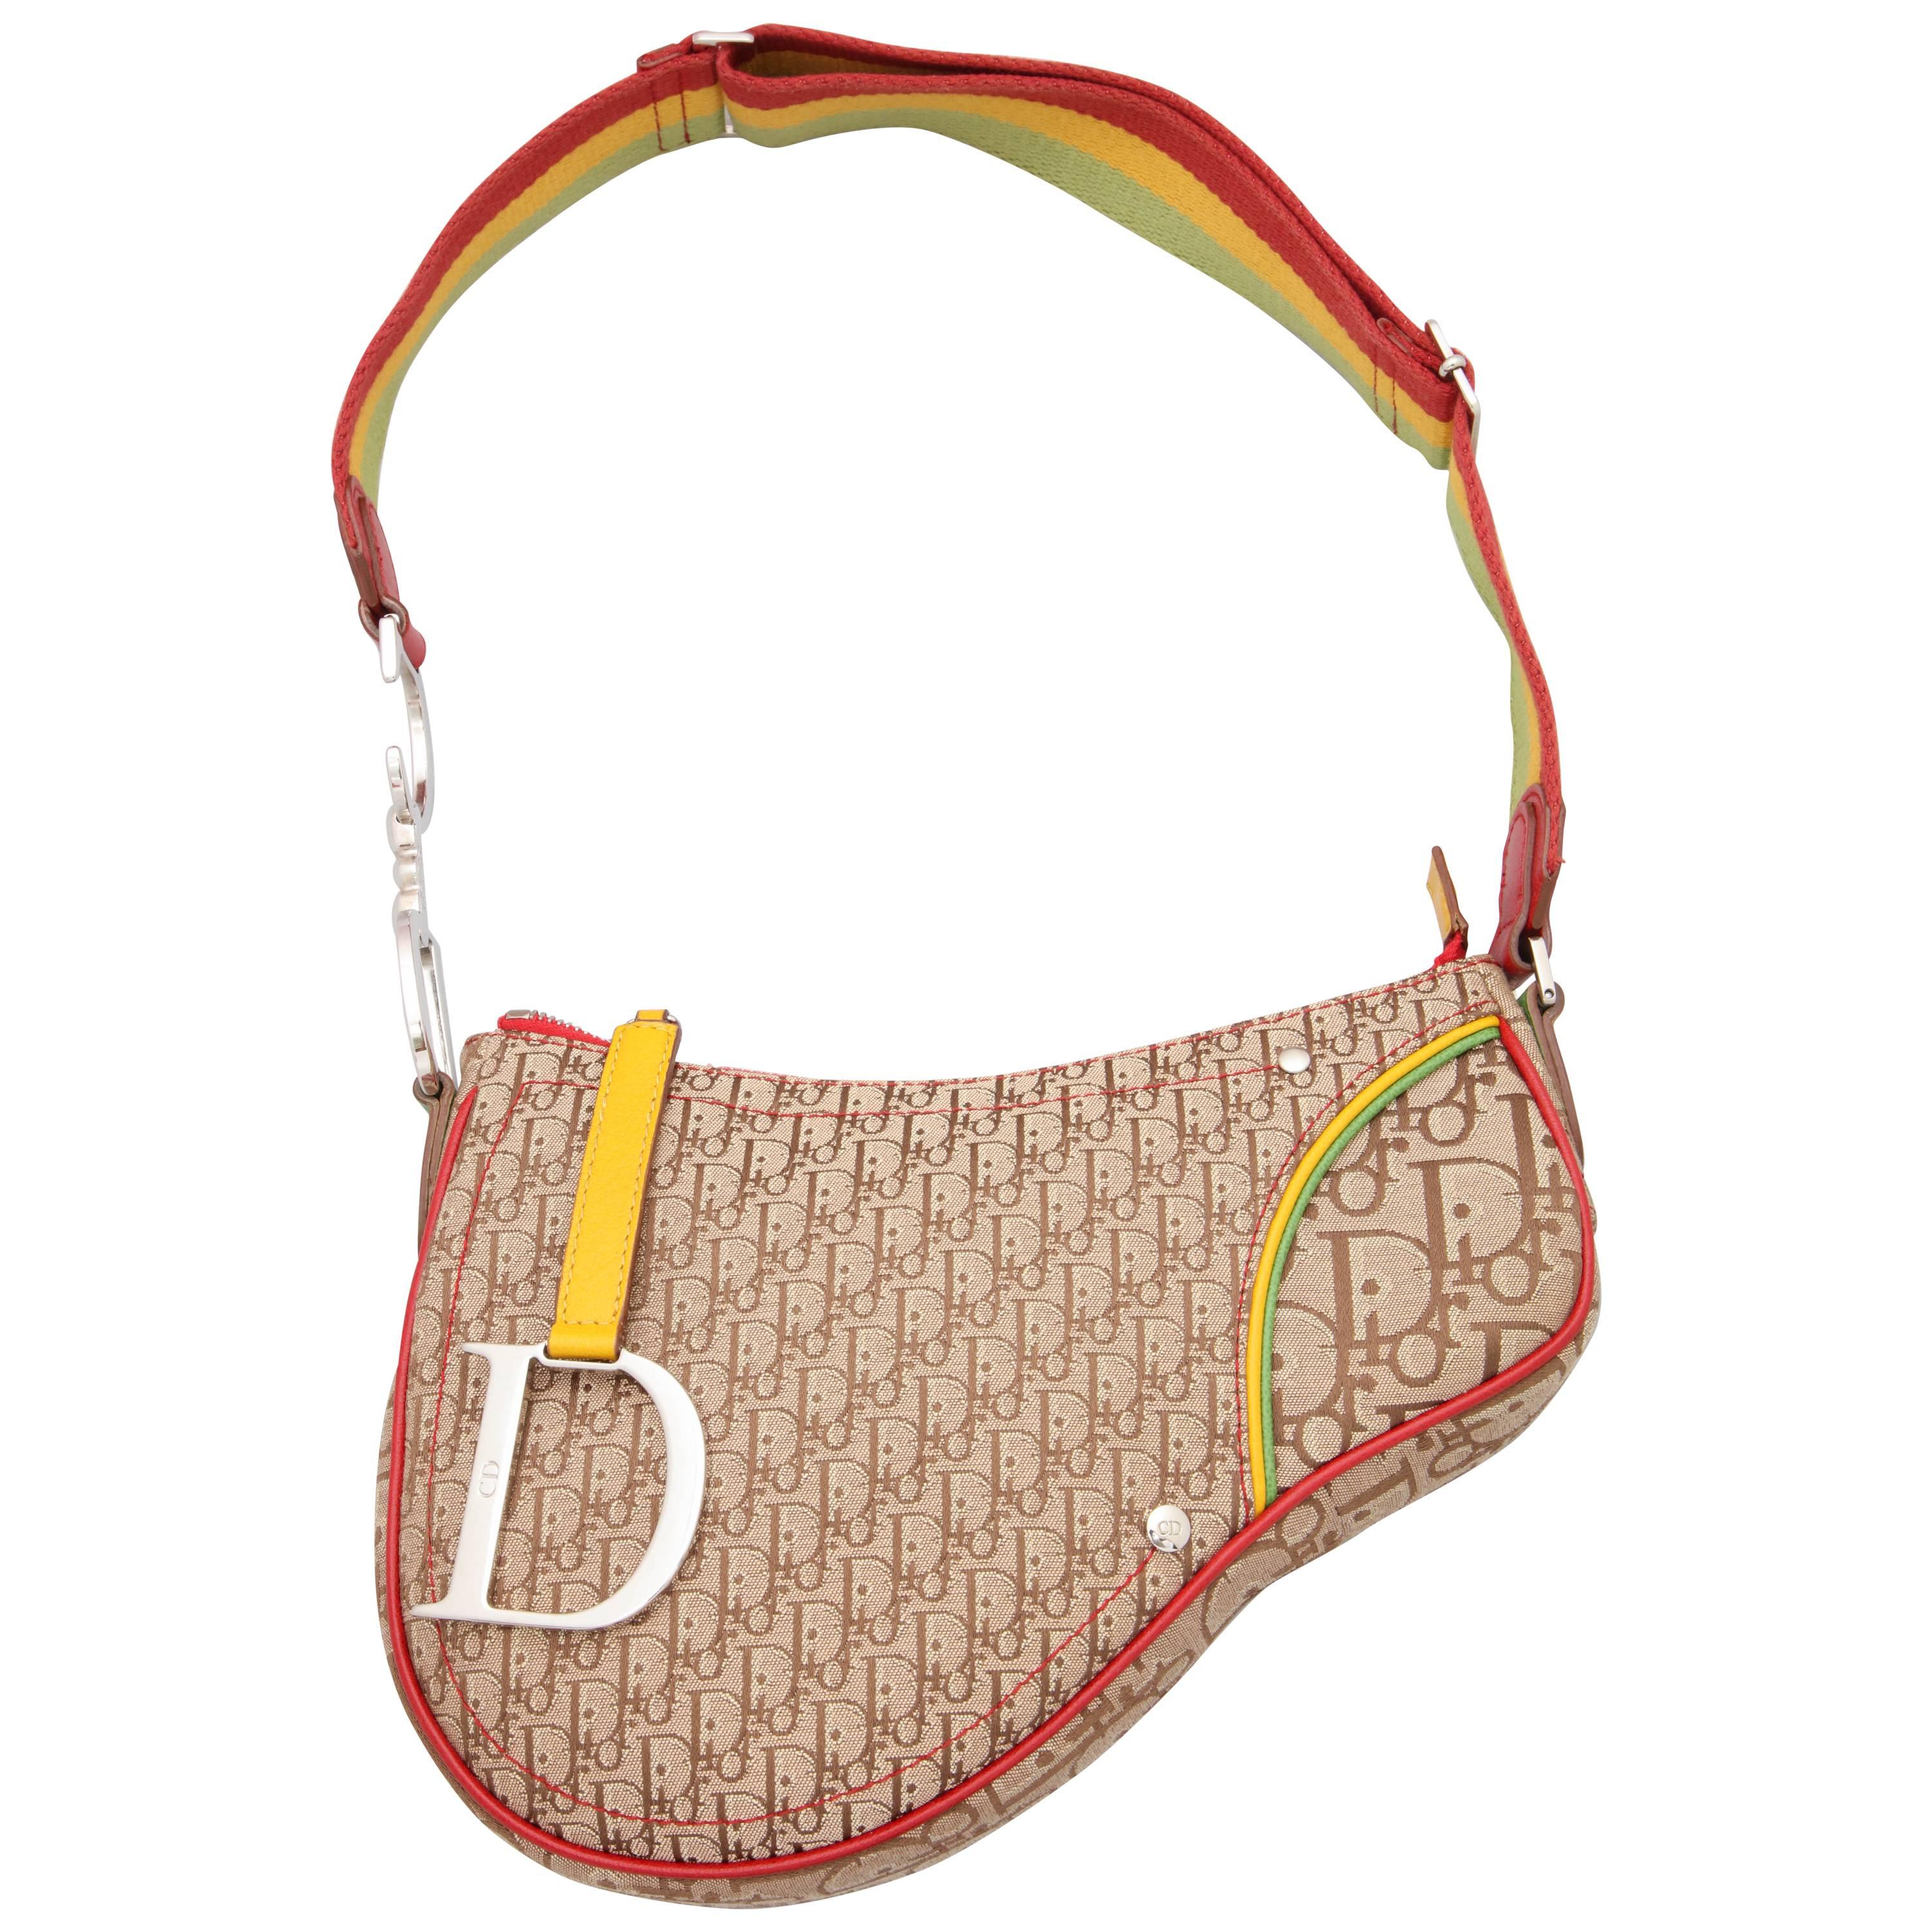 John Galliano for Christian Dior Rasta Collection Saddle Pouchette Bag 